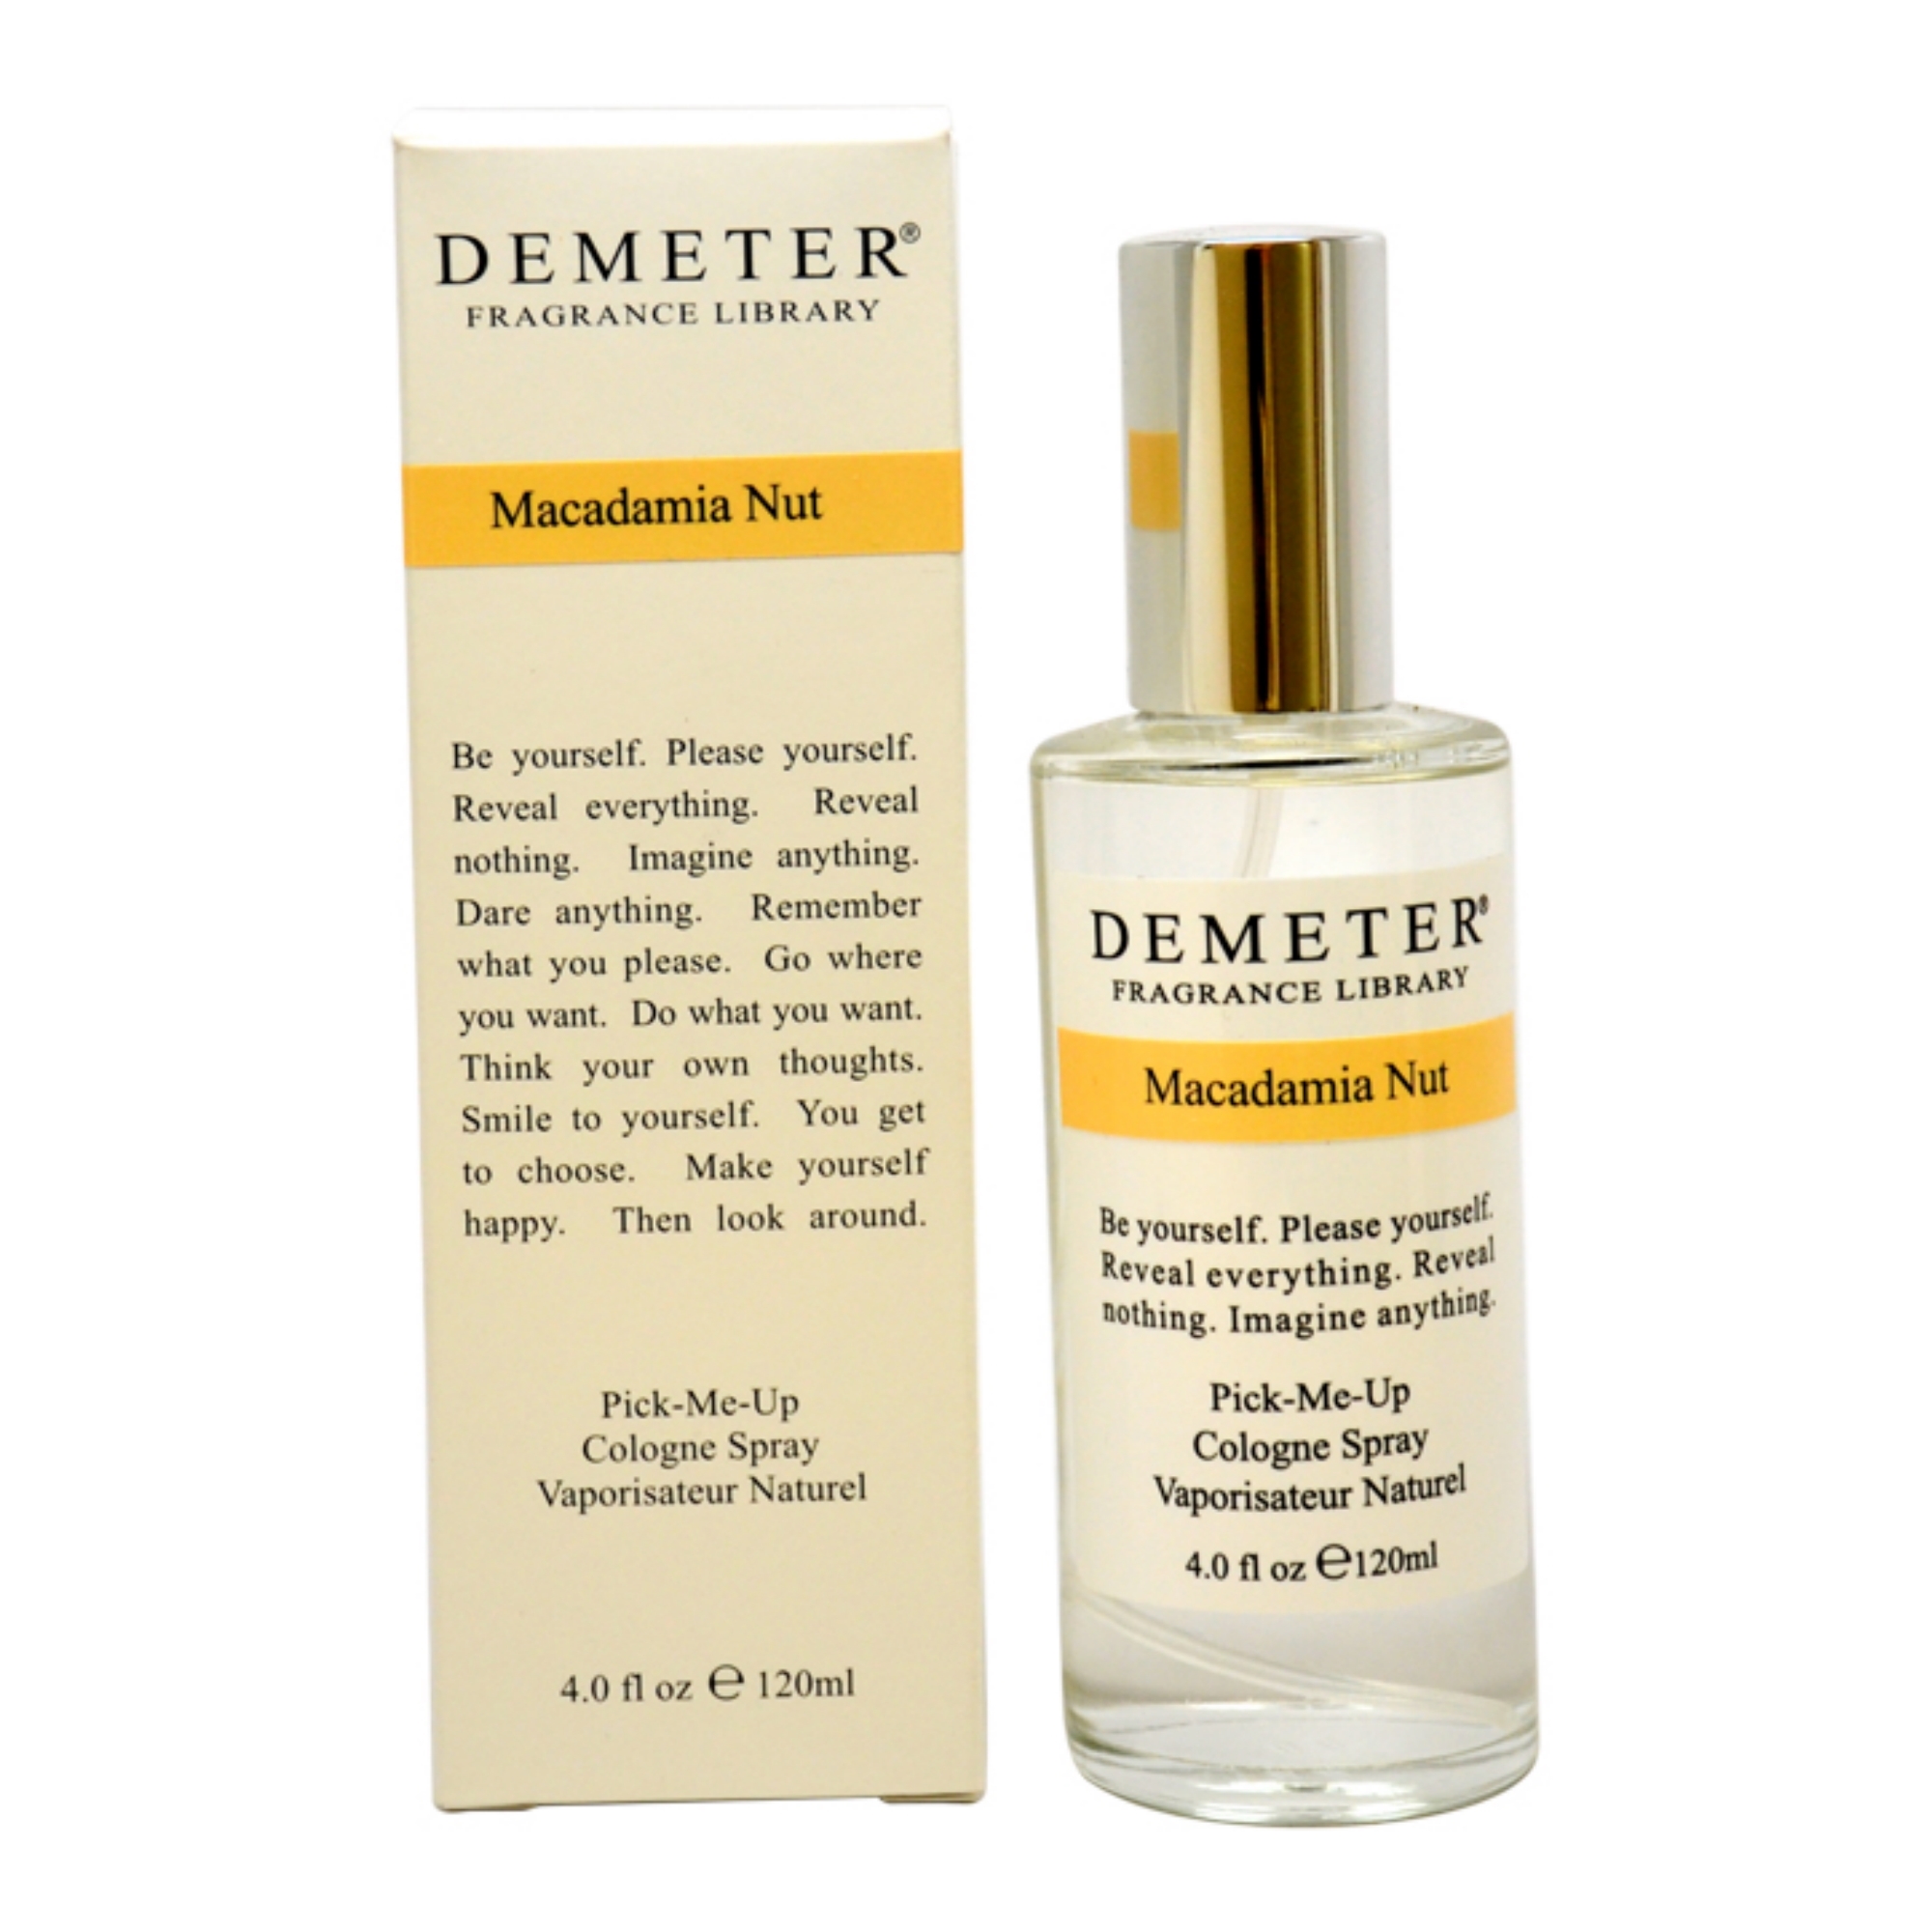 Macadamia Nut by Demeter for Women - 4 oz cologne Spray